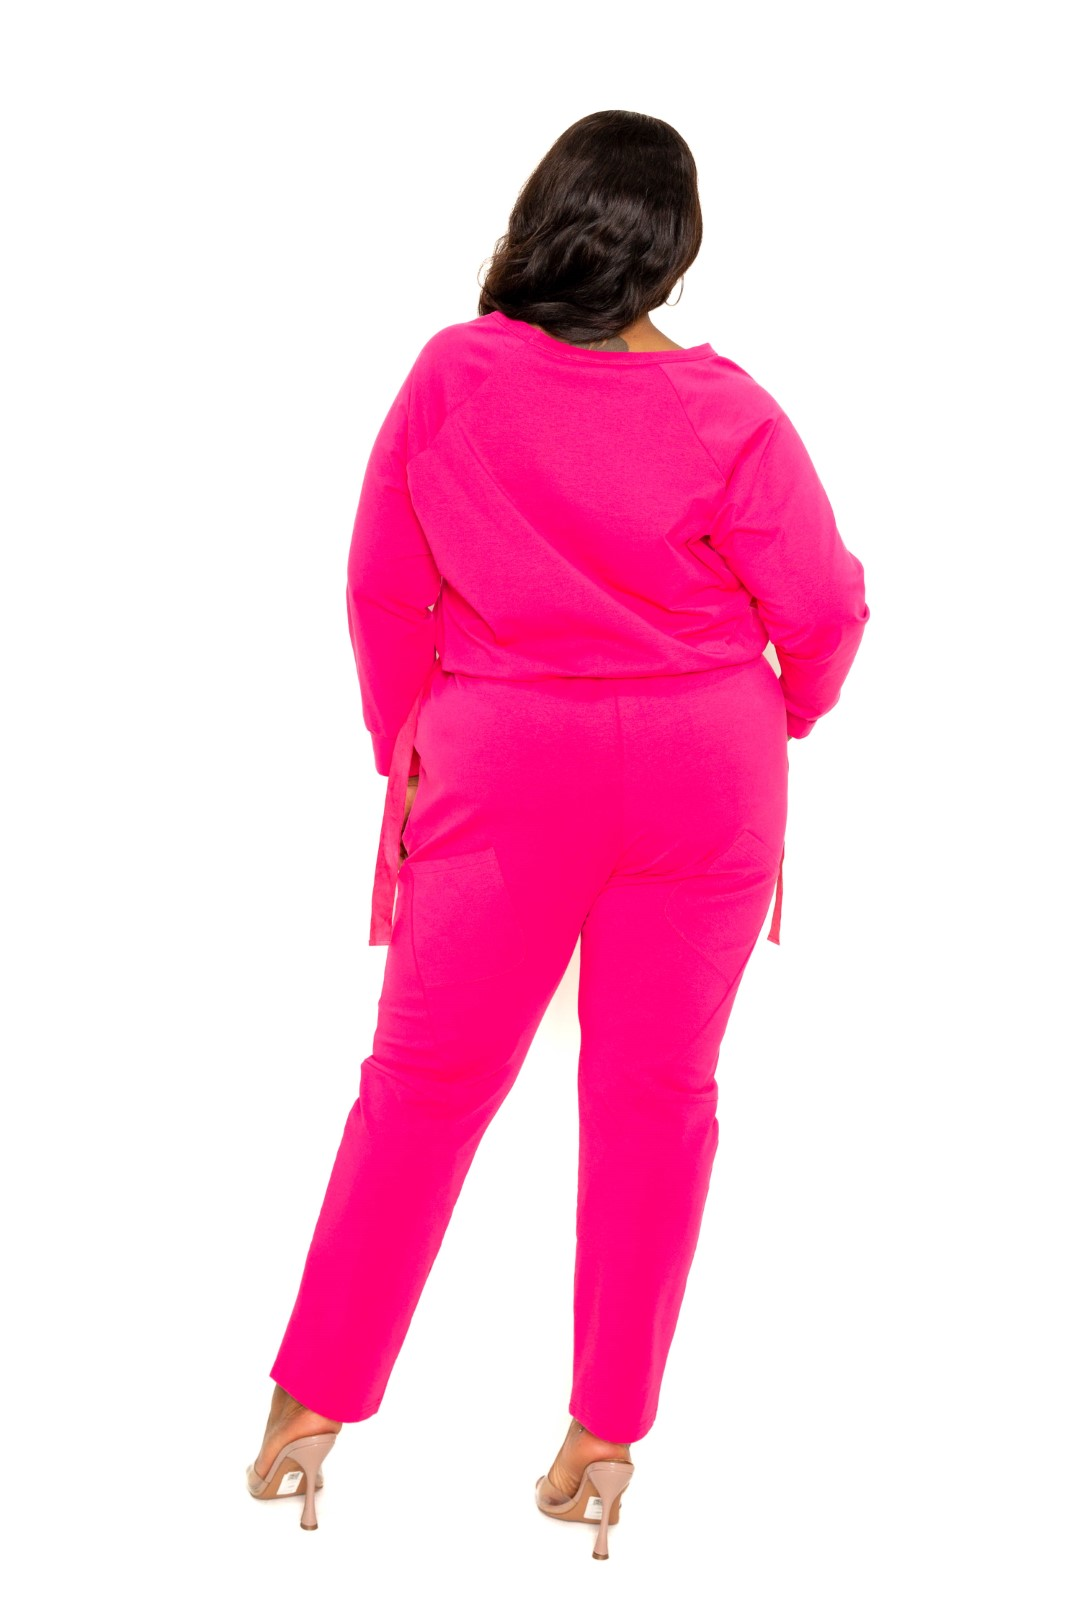 Plus Size Hot Pink Grommet Detail Lounge Set - Tigbul's Fashion